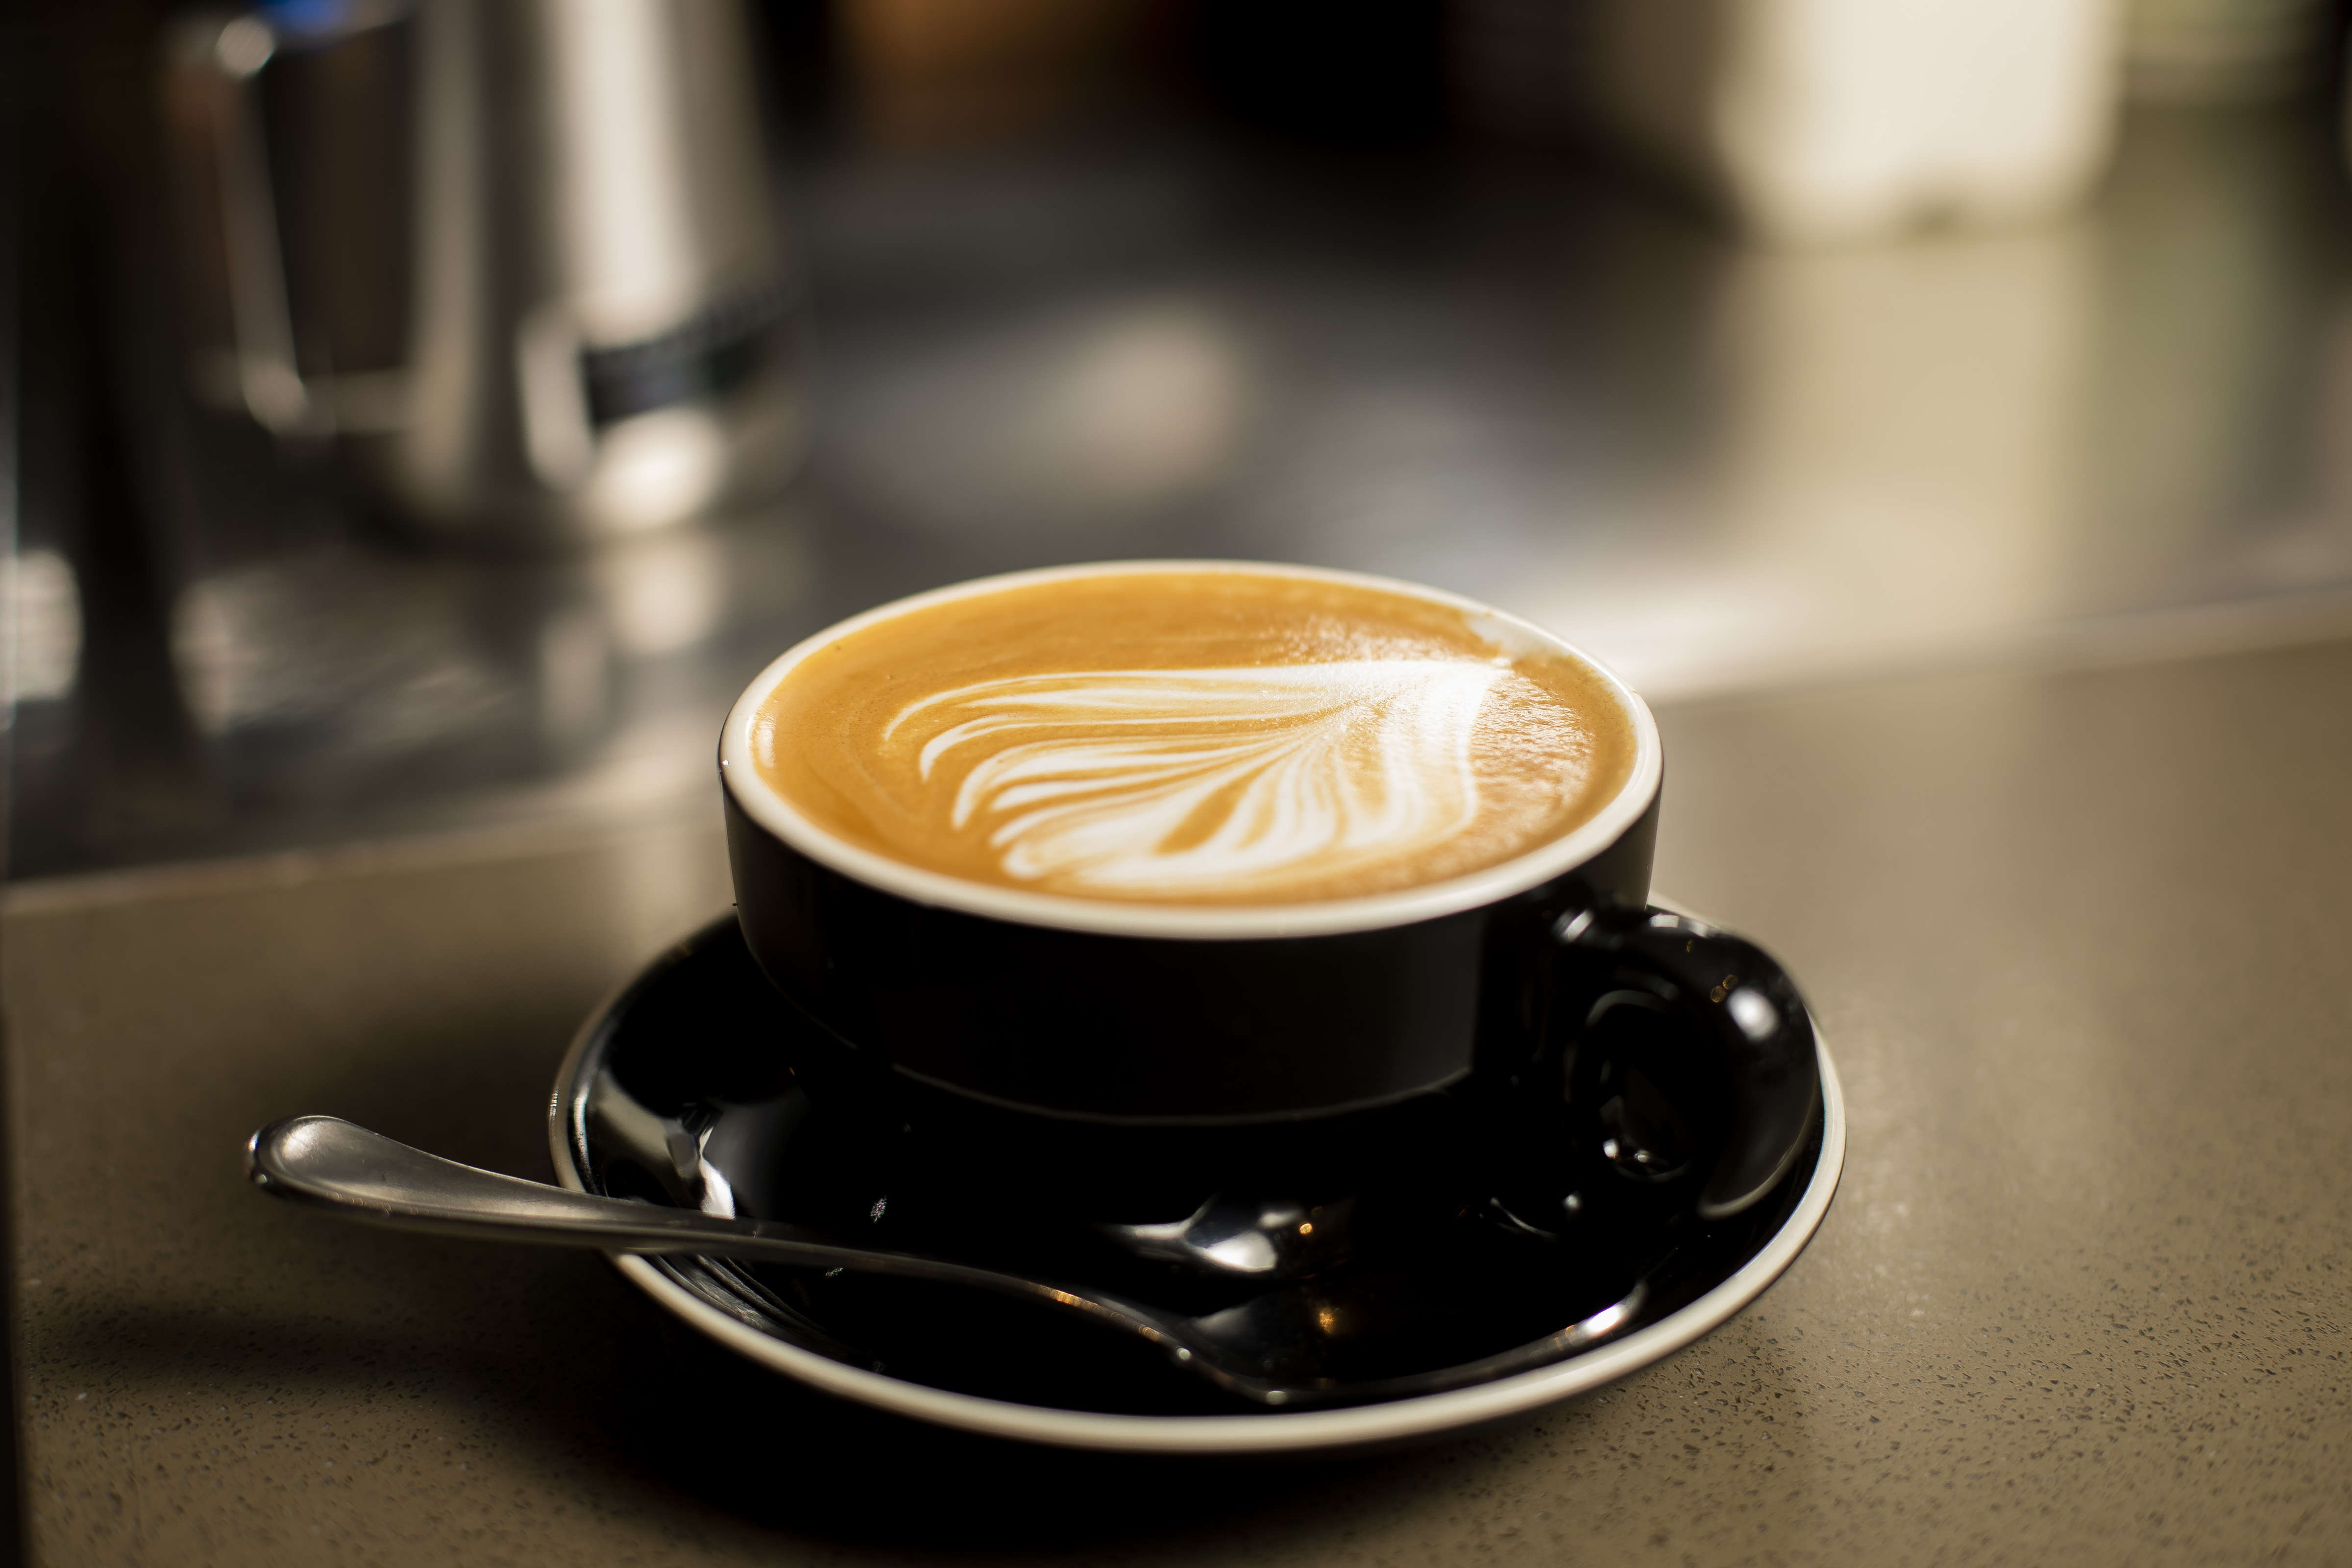 Flat white coffee with a coffee art leaf. Photo: Richard Jupe.